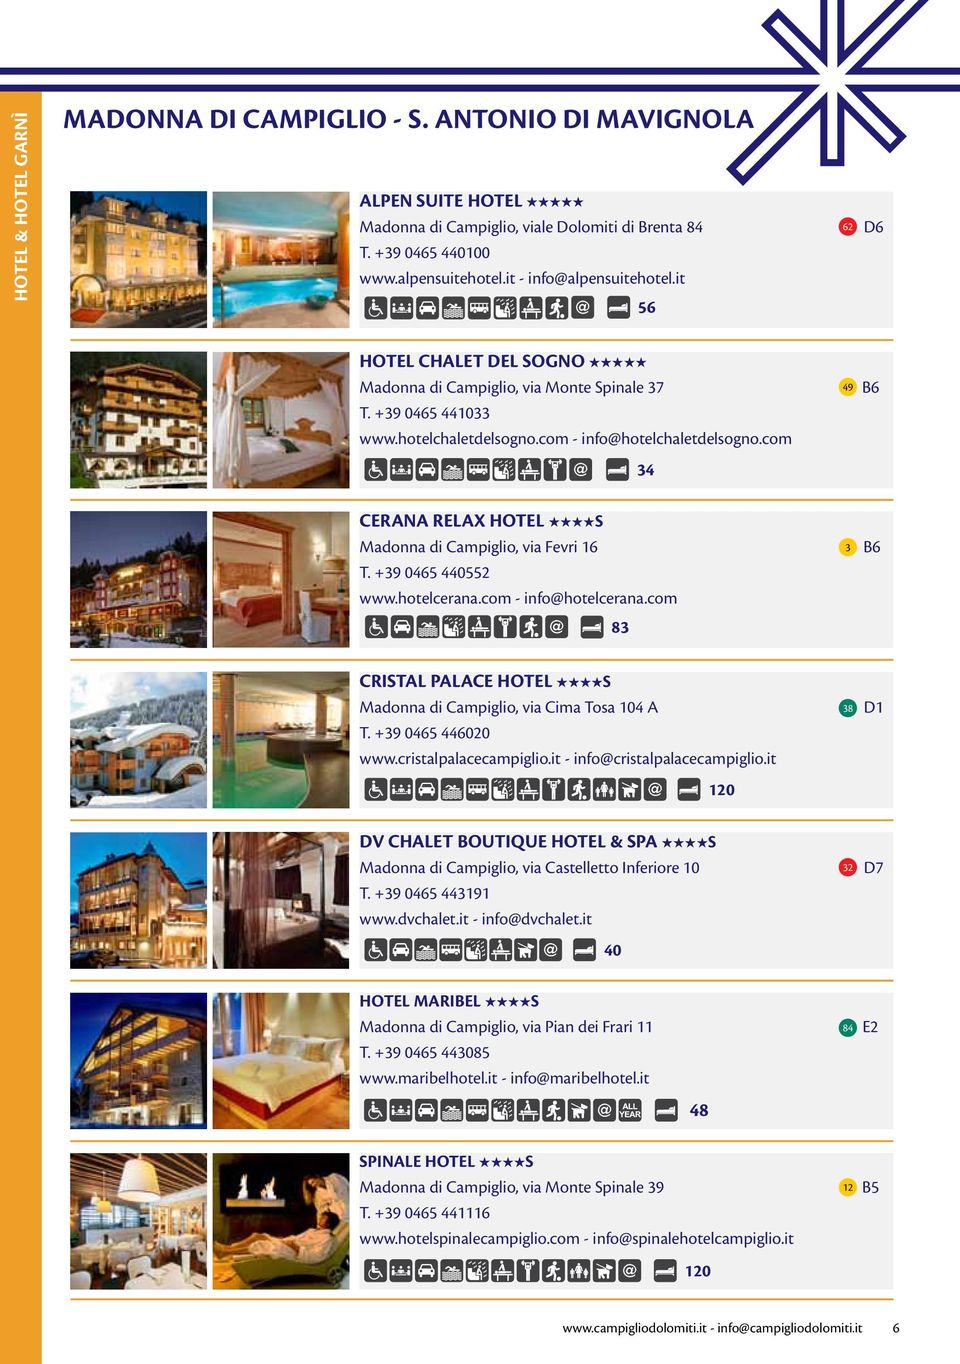 com 34 CERANA RELAX HOTEL S Madonna di Campiglio, via Fevri 16 3 B6 T. +39 0465 440552 www.hotelcerana.com - info@hotelcerana.